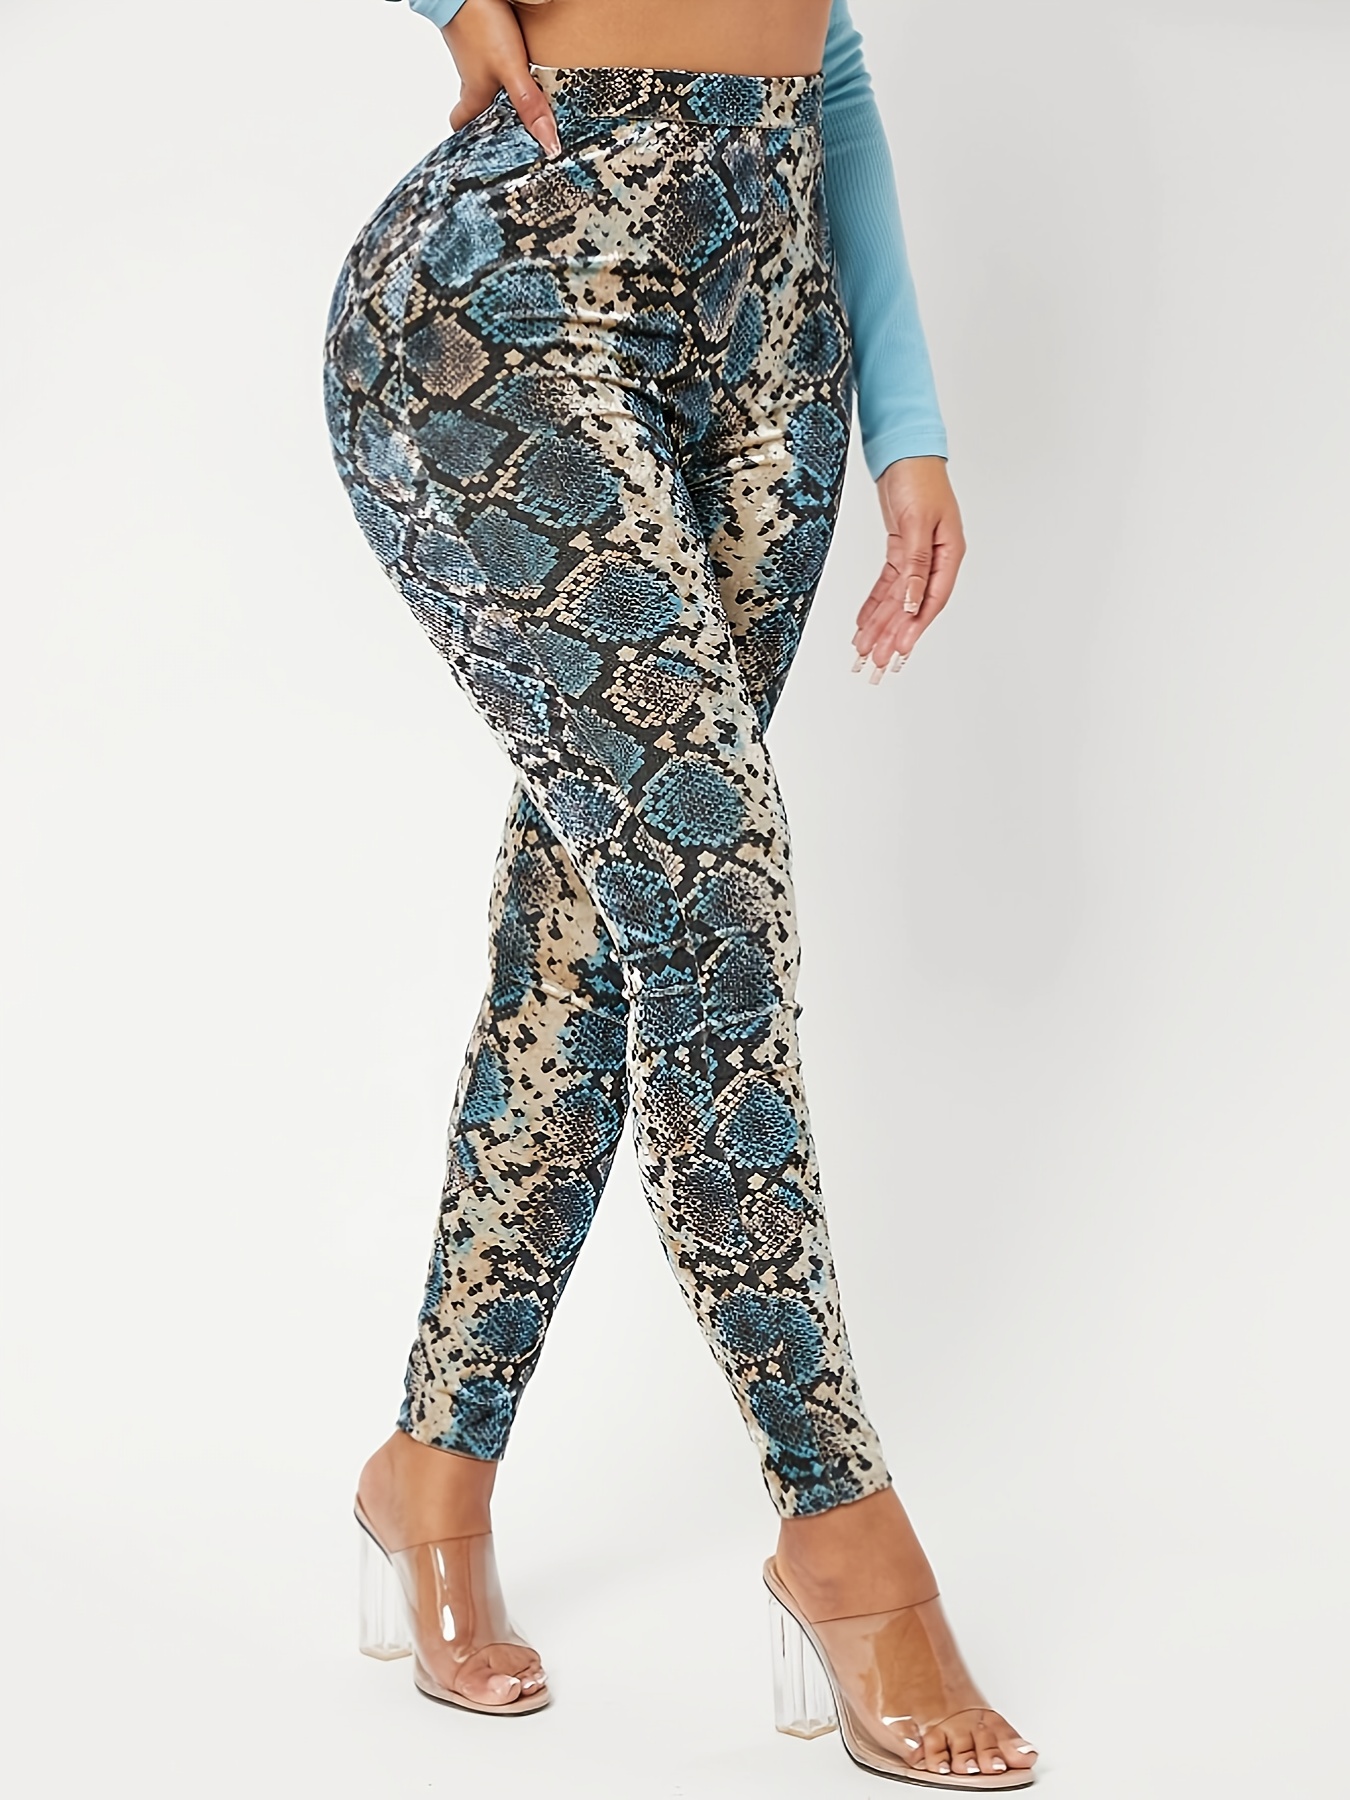 My Choice Stuff Ladies High Waist Snake Print Pants Leggings : :  Clothing, Shoes & Accessories